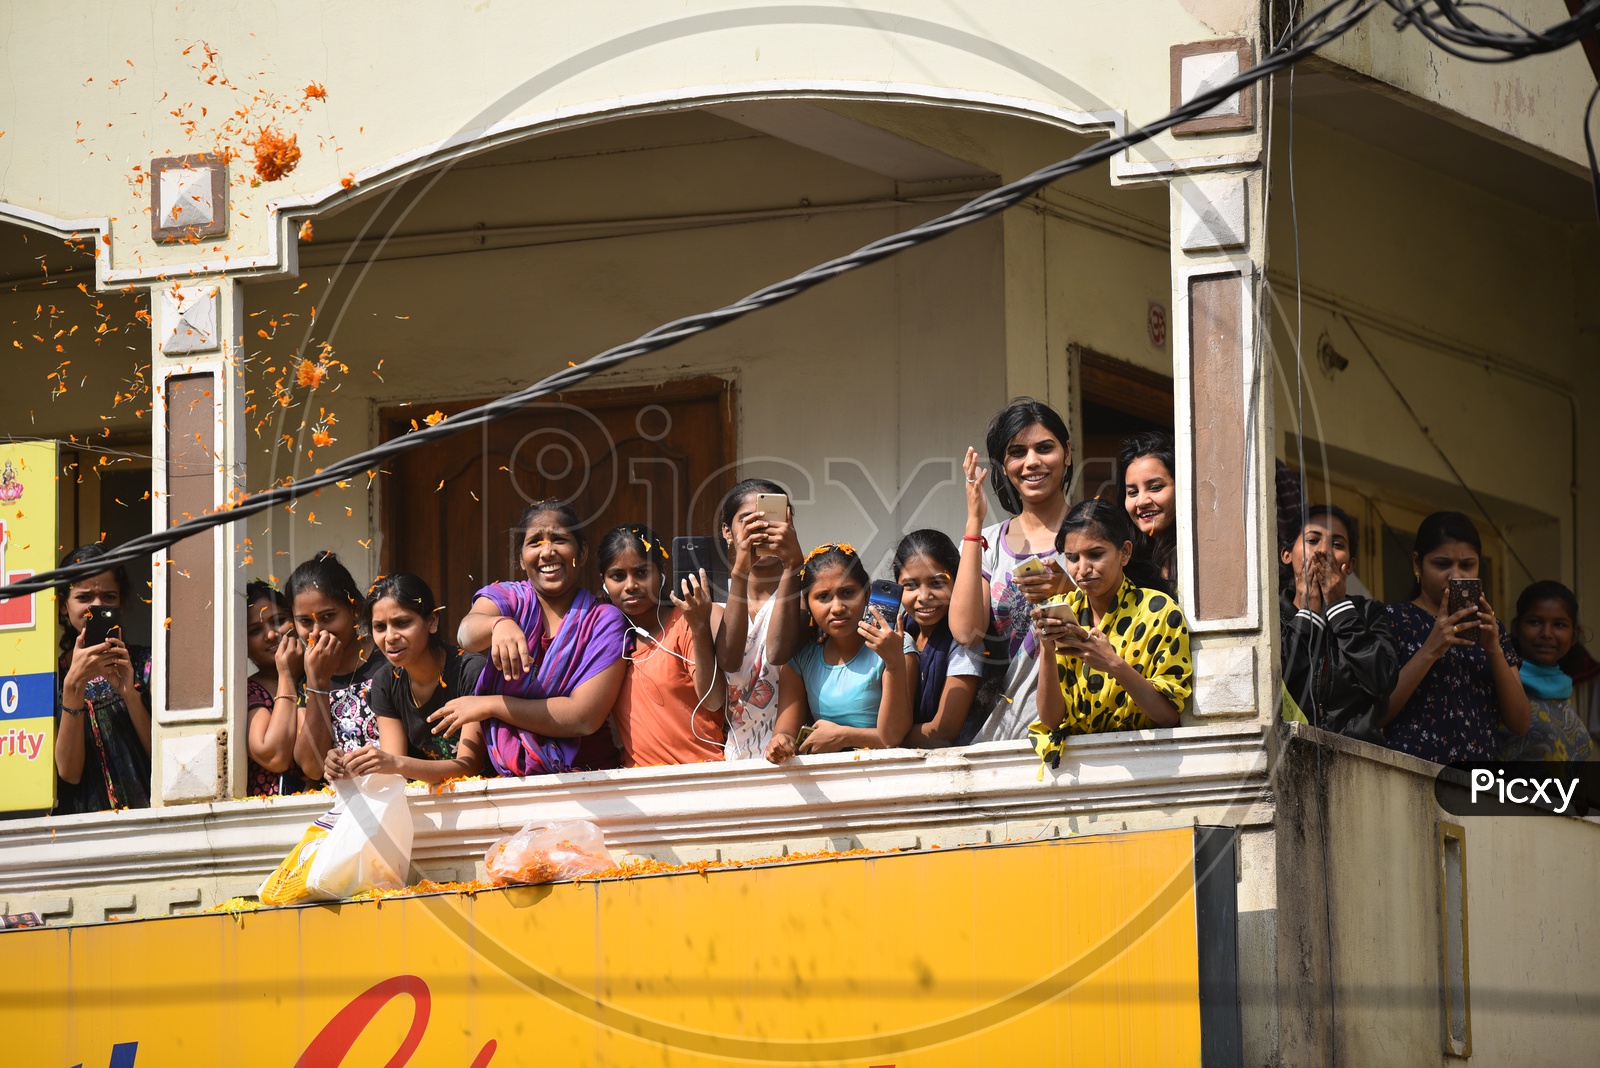 Hostel Girls Watching the Road Show of Balakrishna